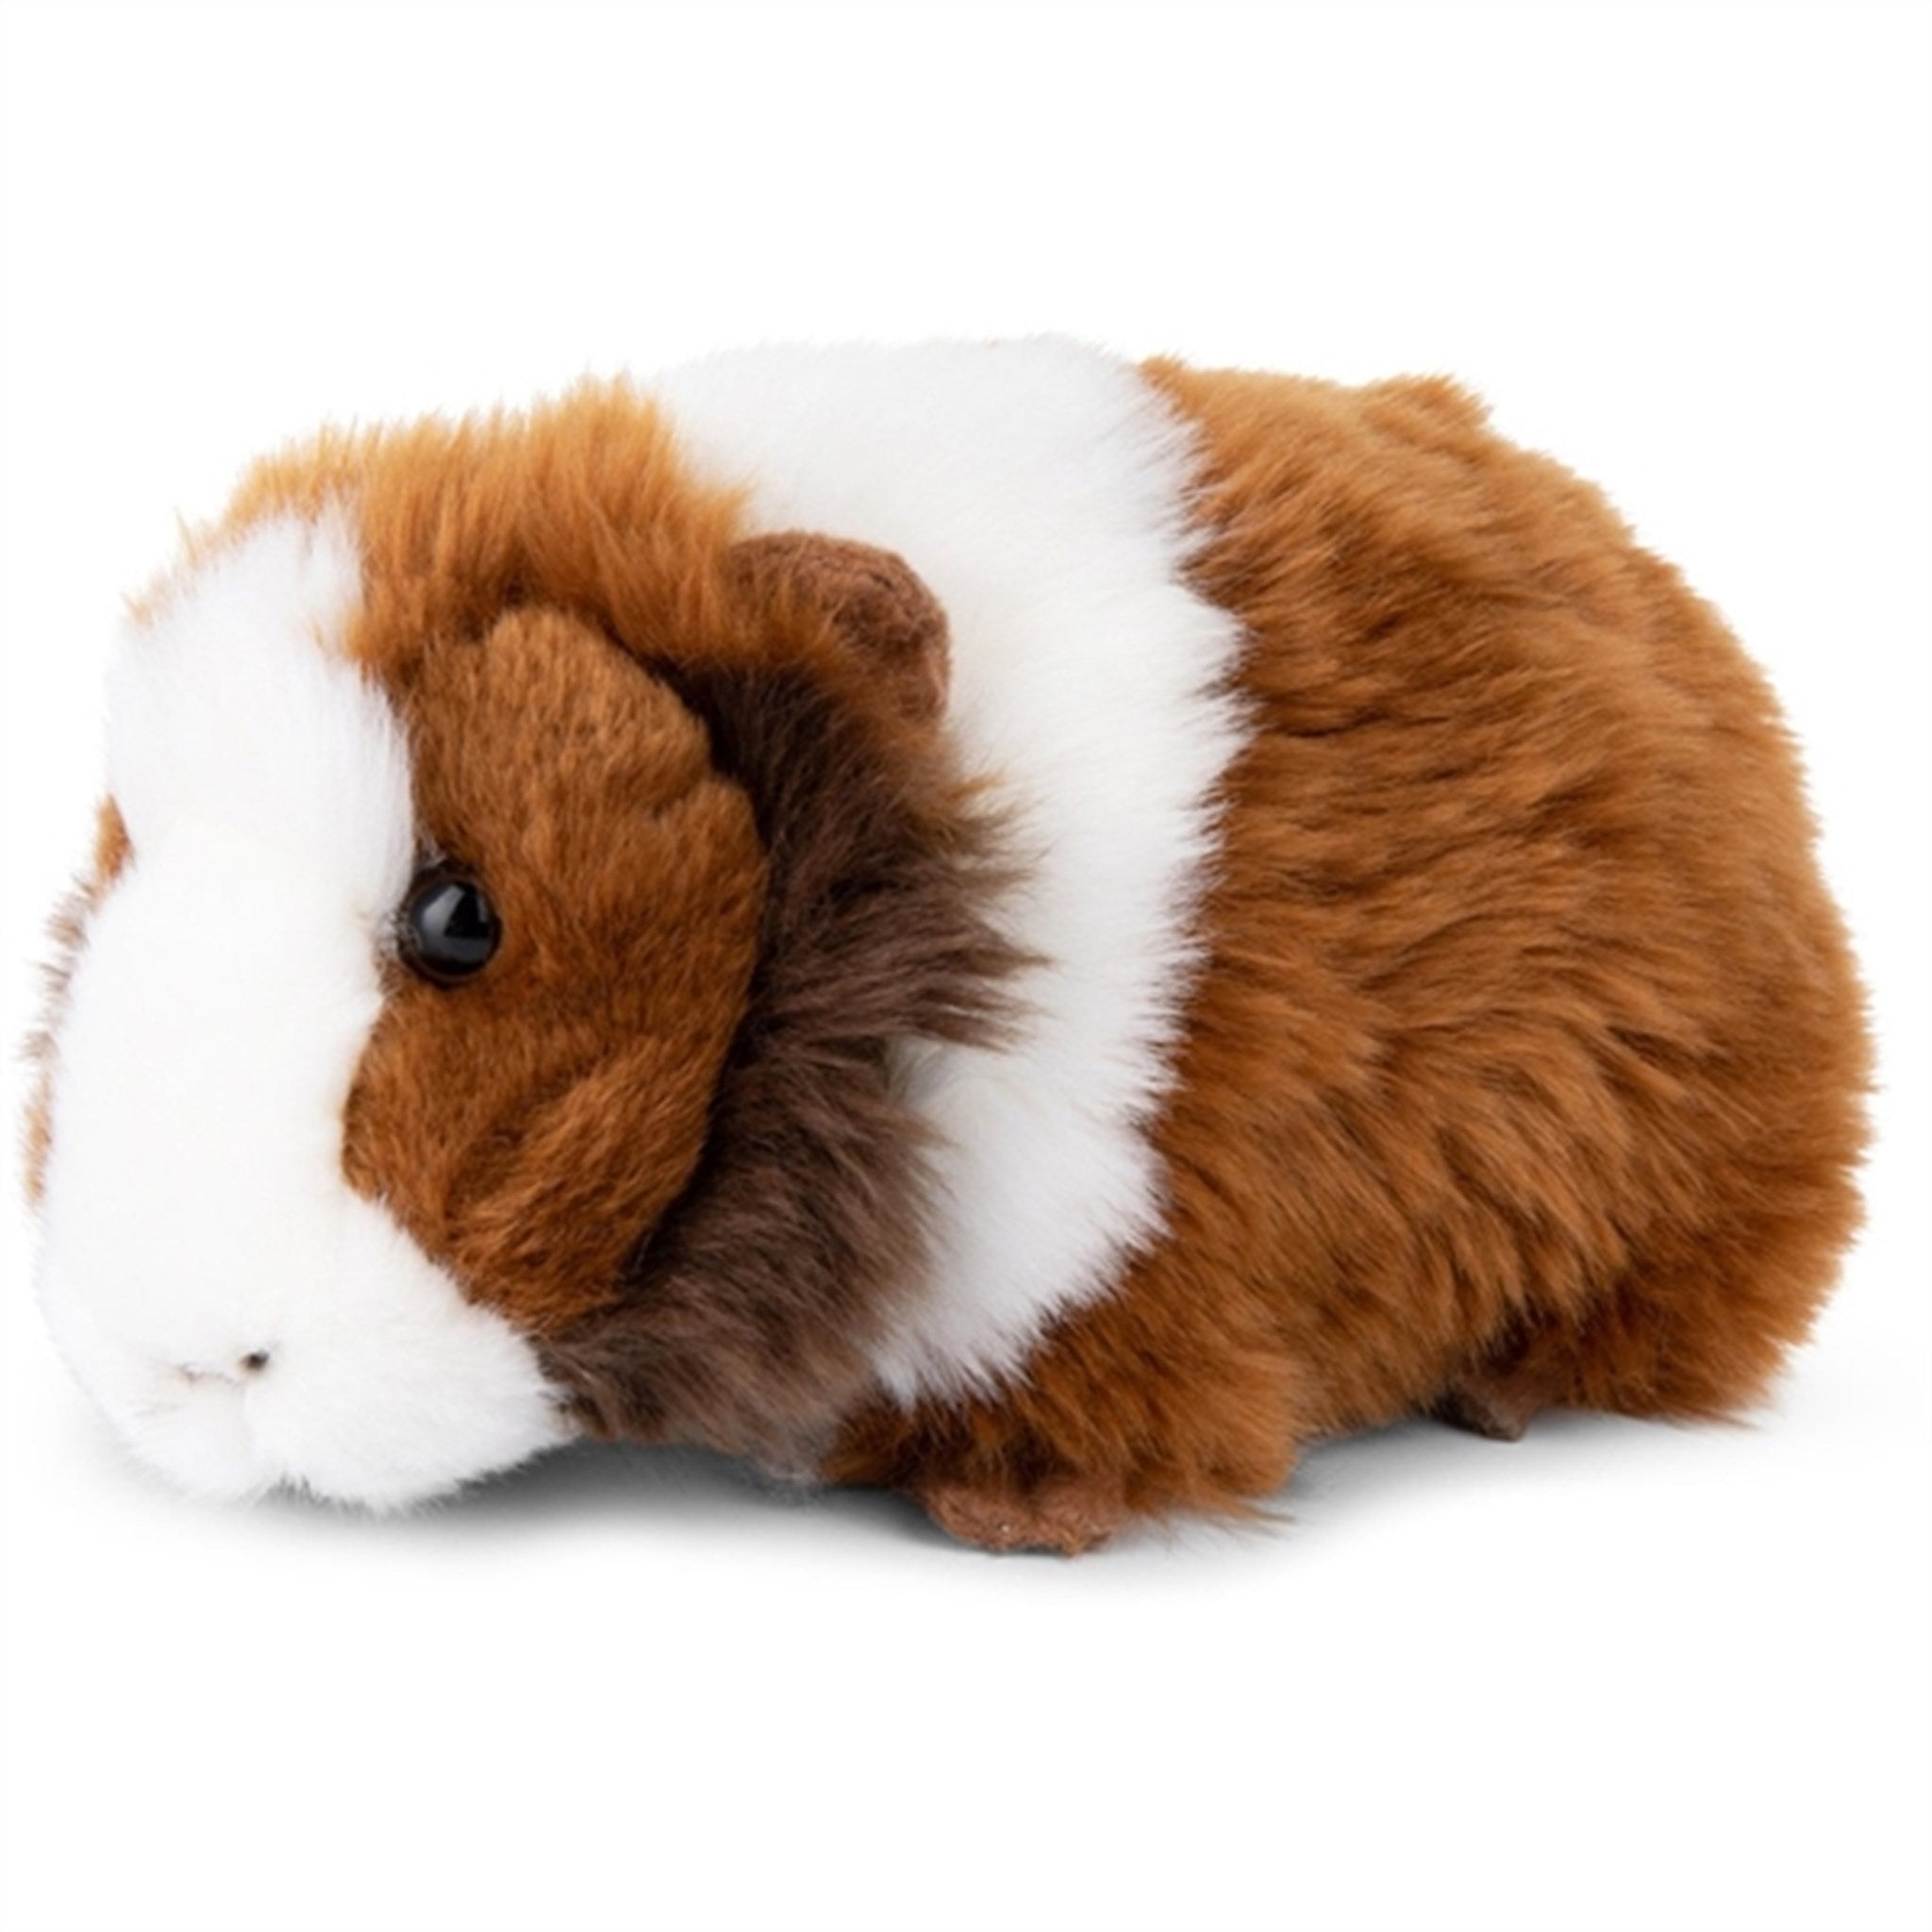 Bon Ton Toys WWF Plush Guinea Pig 19 cm